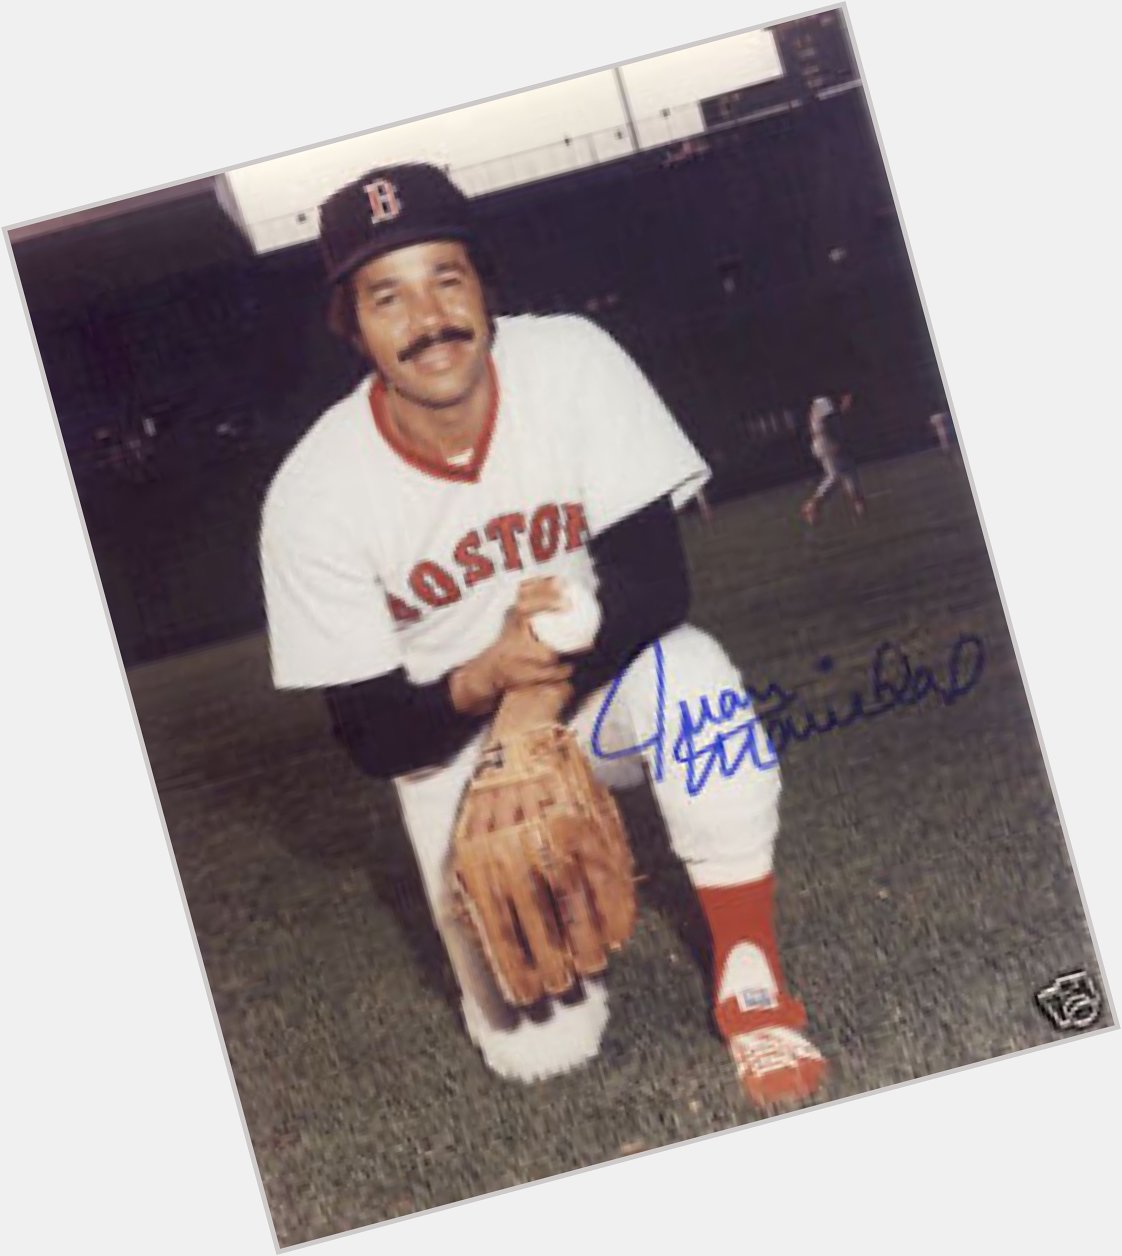 Happy 85th birthday to Boston Red Sox great Juan Marichal! 